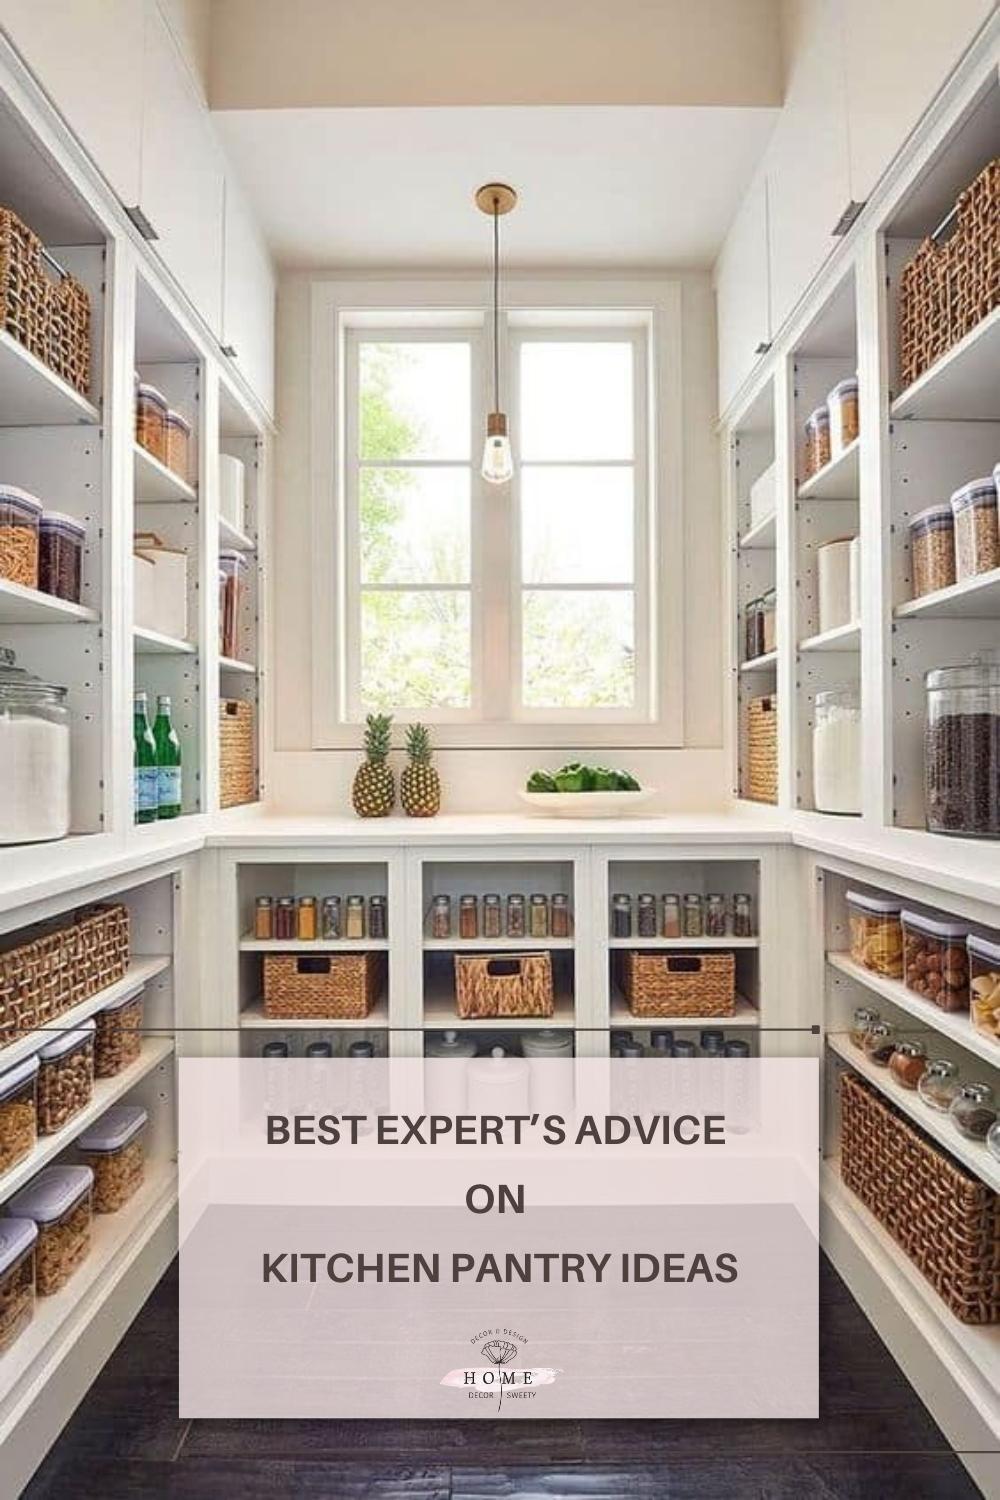 Best Expert’s Advice on kitchen pantry ideas